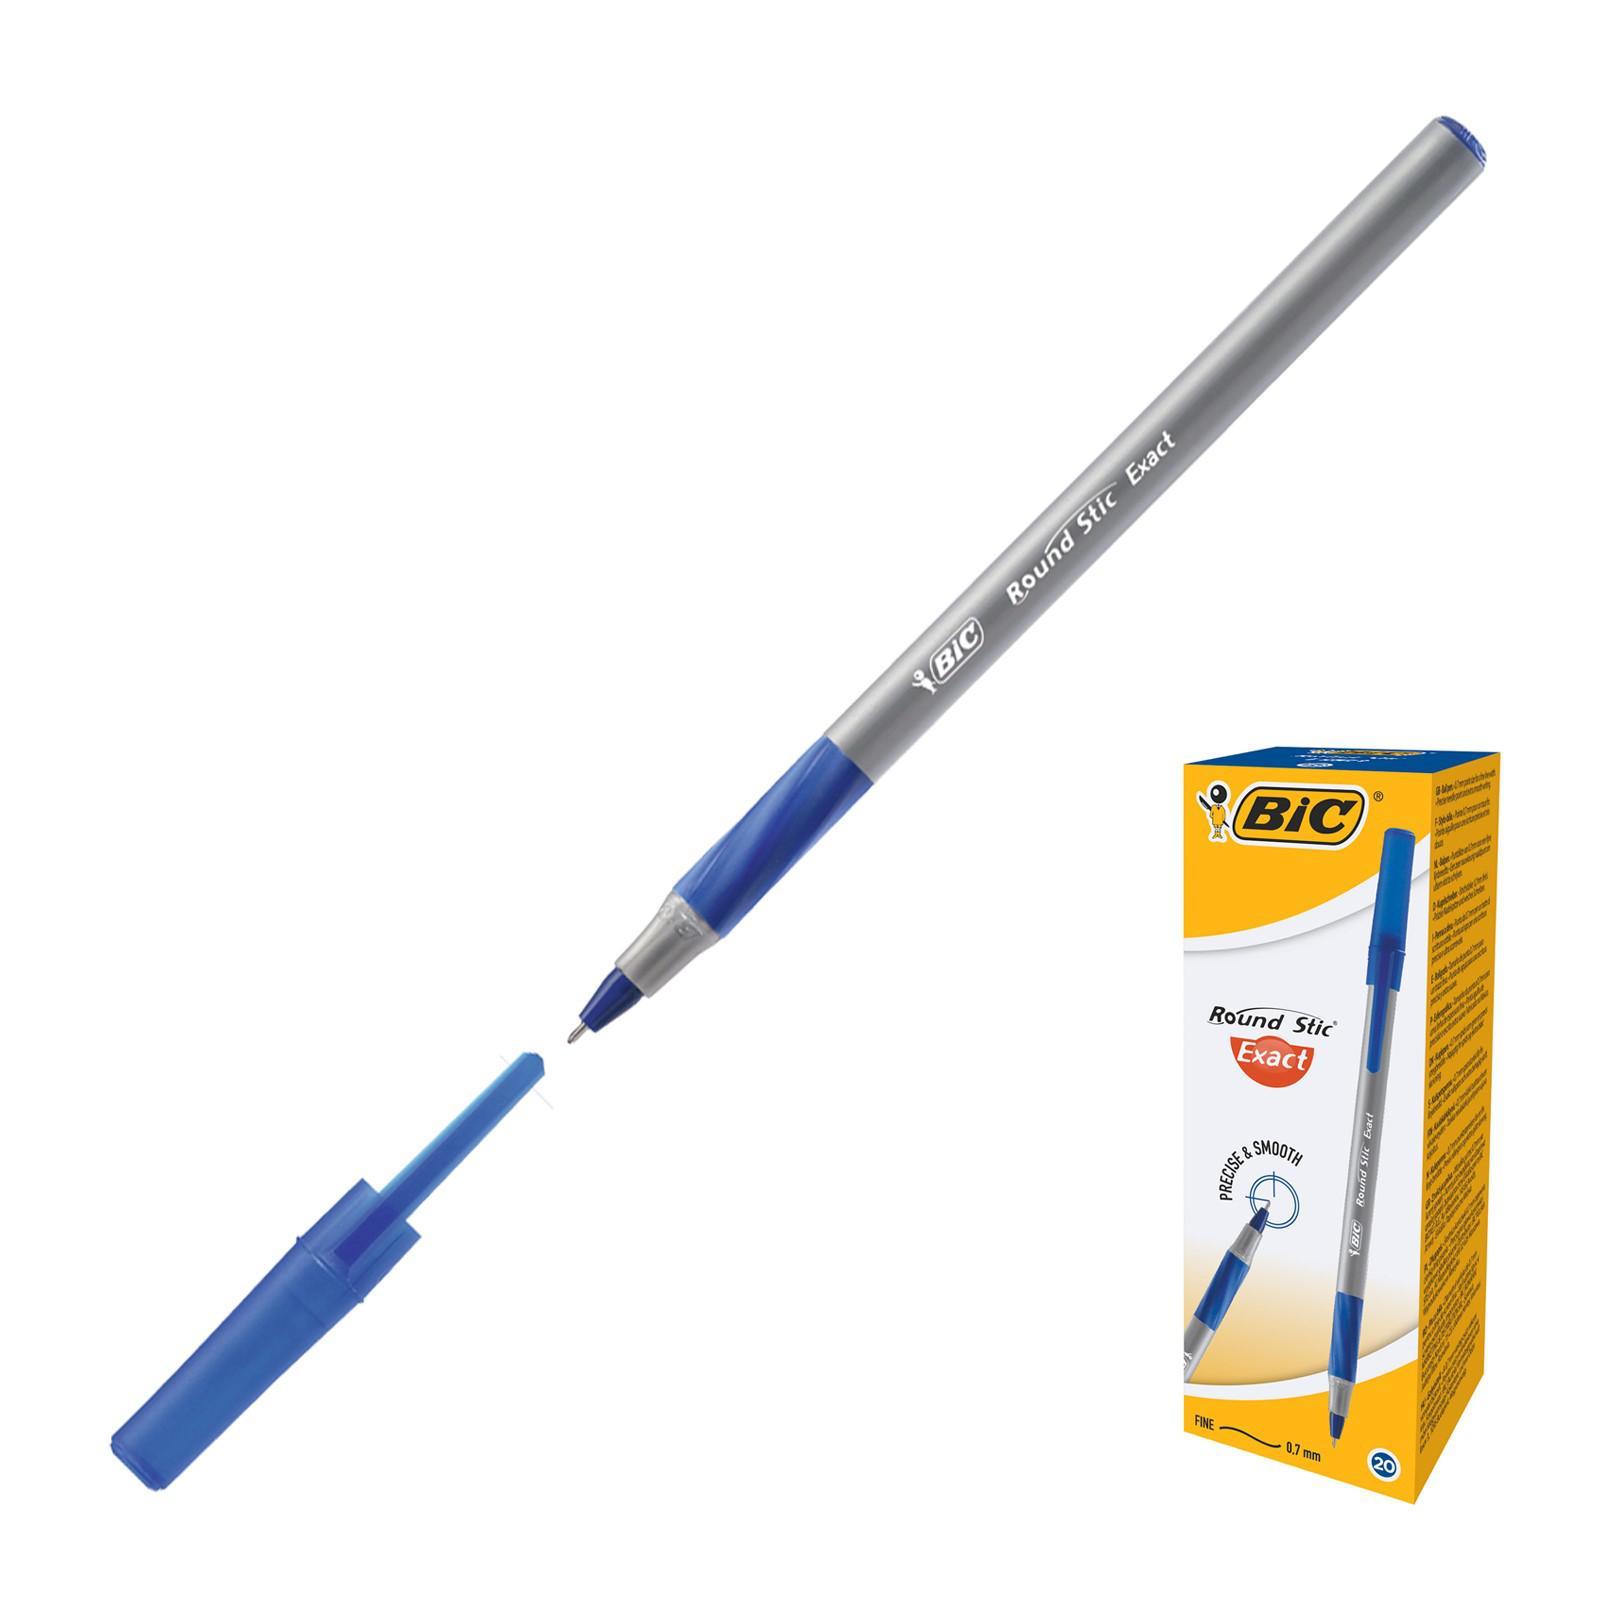 Ручка шариковая синяя BiC Round Stic Exact 0.7 мм